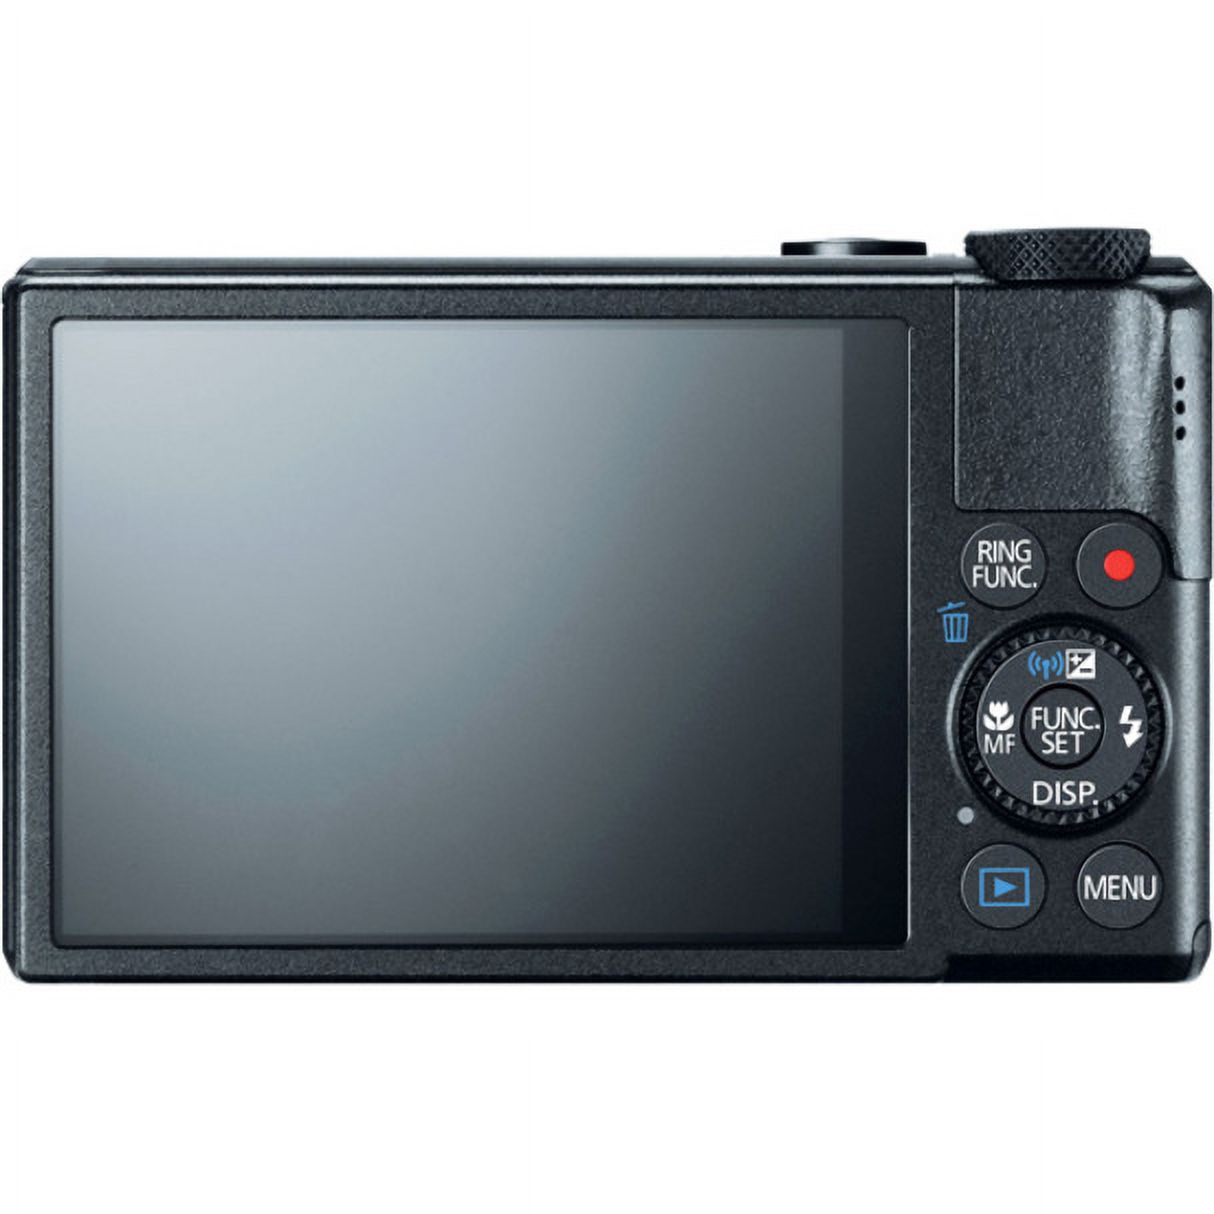 Canon PowerShot S110 12.1 Megapixel Compact Camera, Black - image 4 of 5